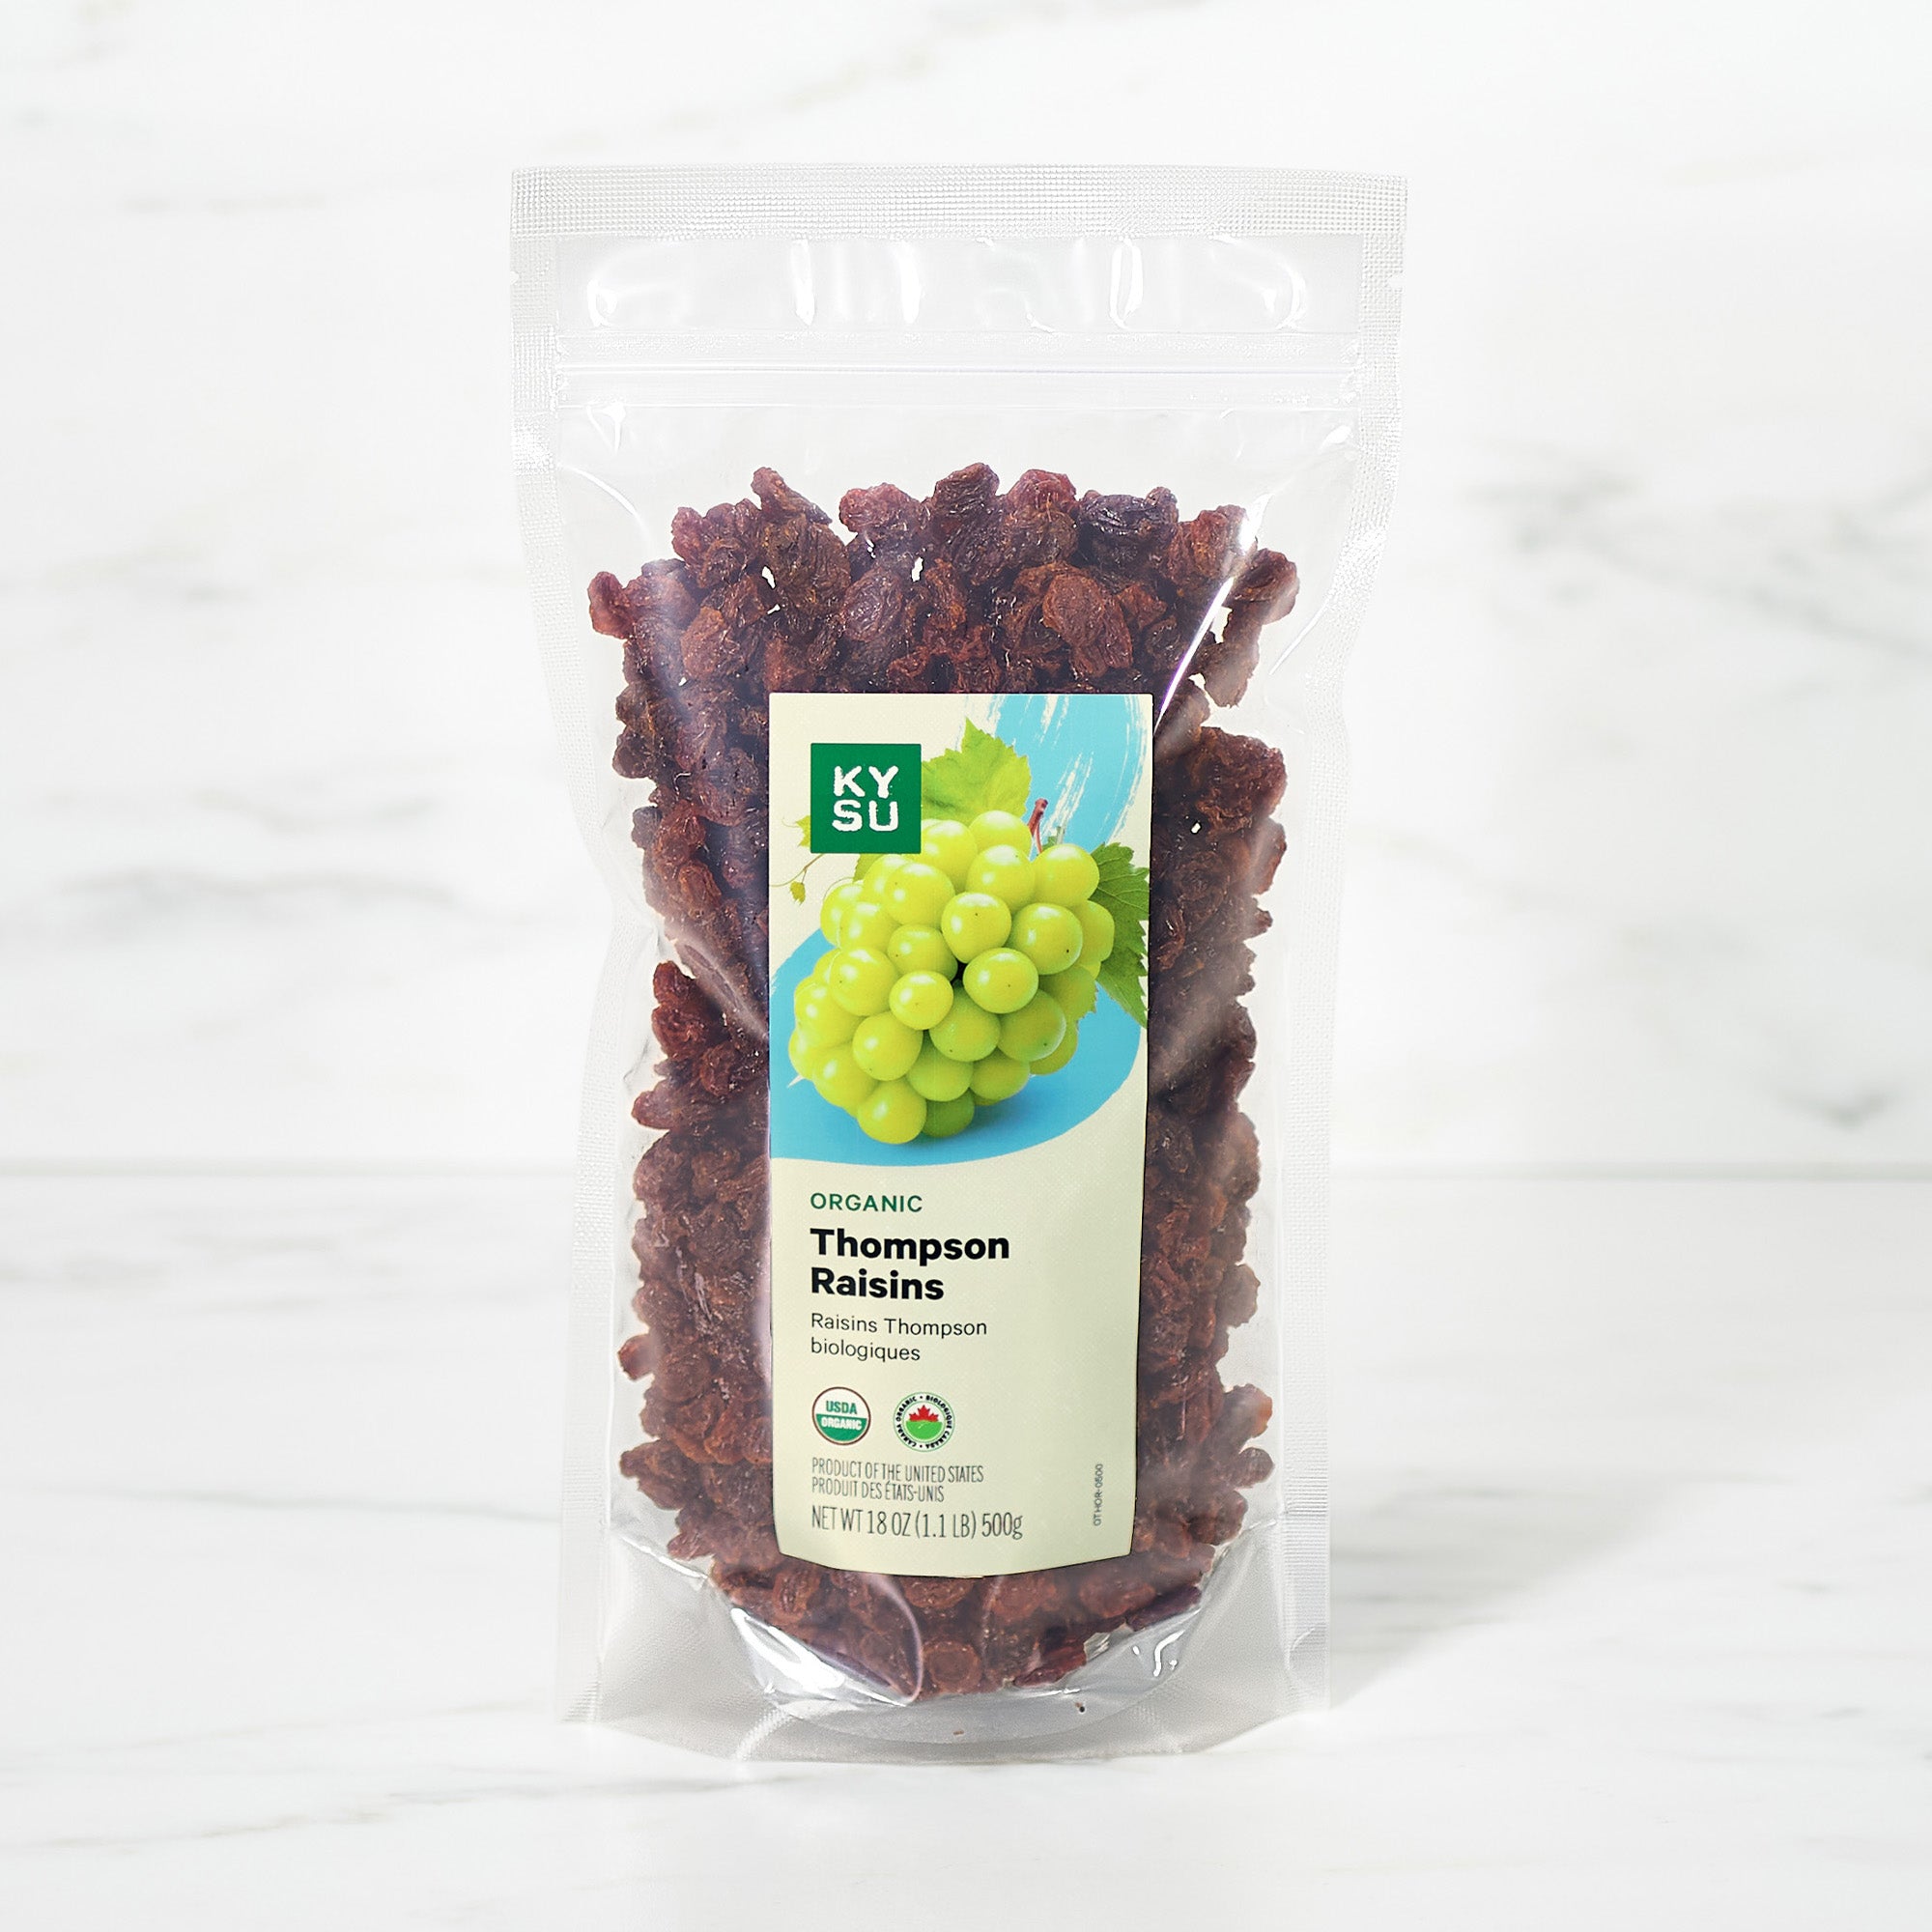 Organic Thompson raisins, 1.1 lb